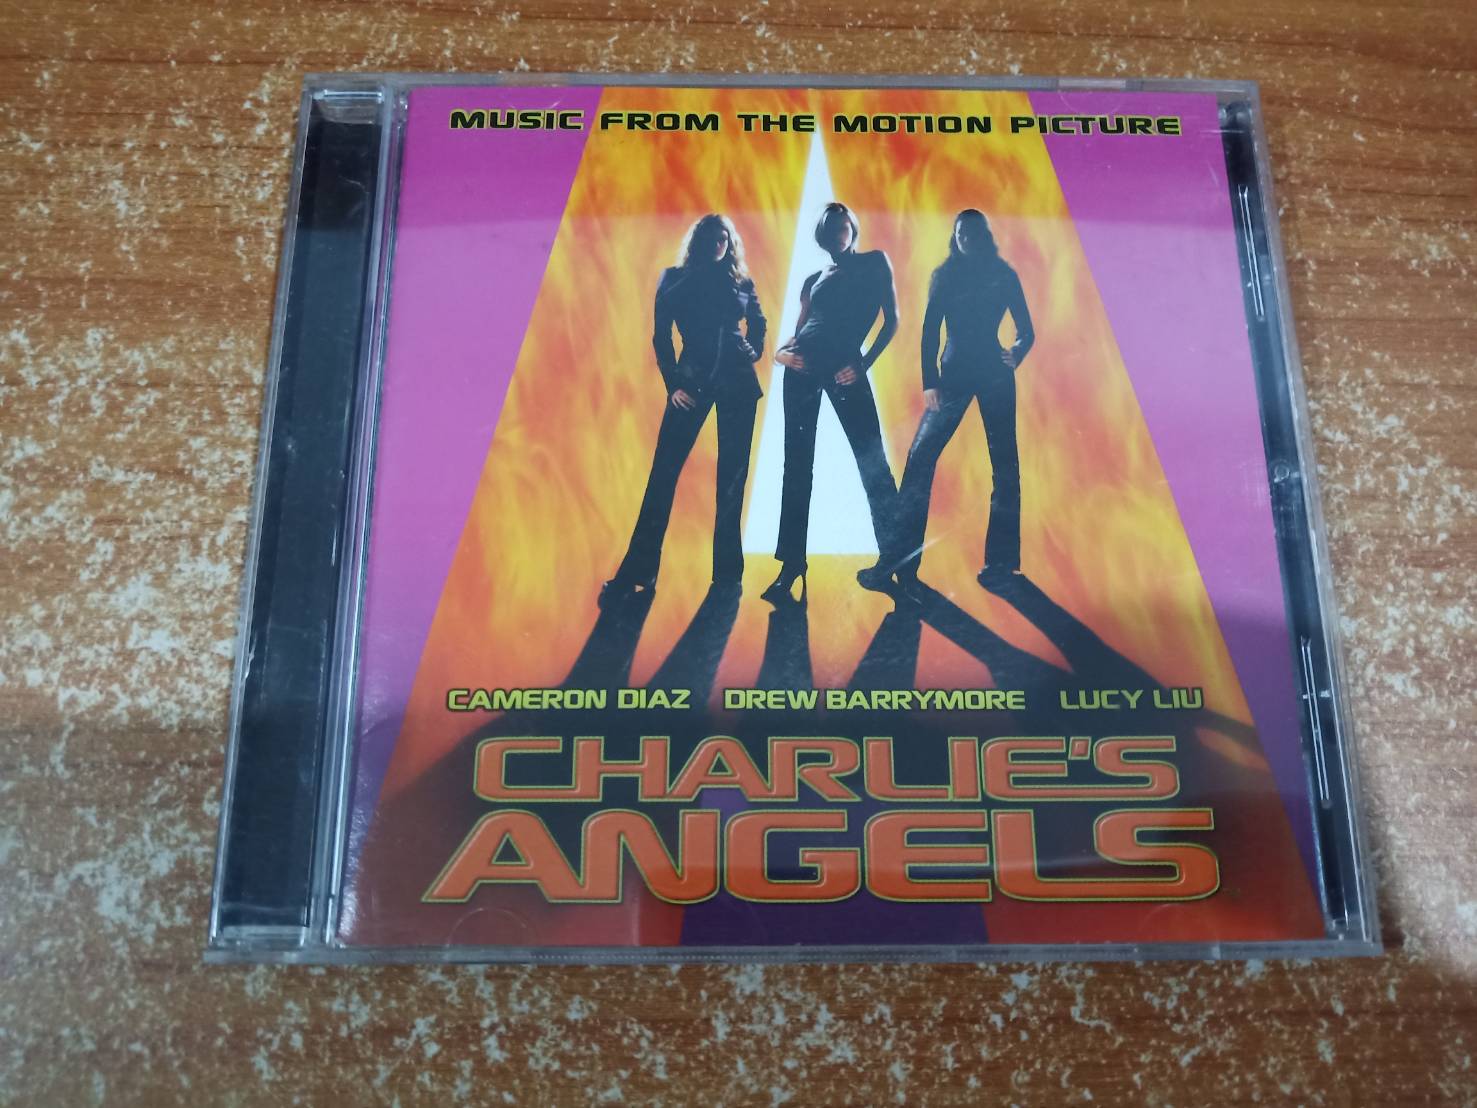 CD MUSIC ซีดี เพลง CHARLIE'S ANGELS MUSIC FROM THE MNOTION PICTURE***โปรดดูภาพและอ่านรายละเอียดสินค้าก่อนทำการสั่งซื้อ***